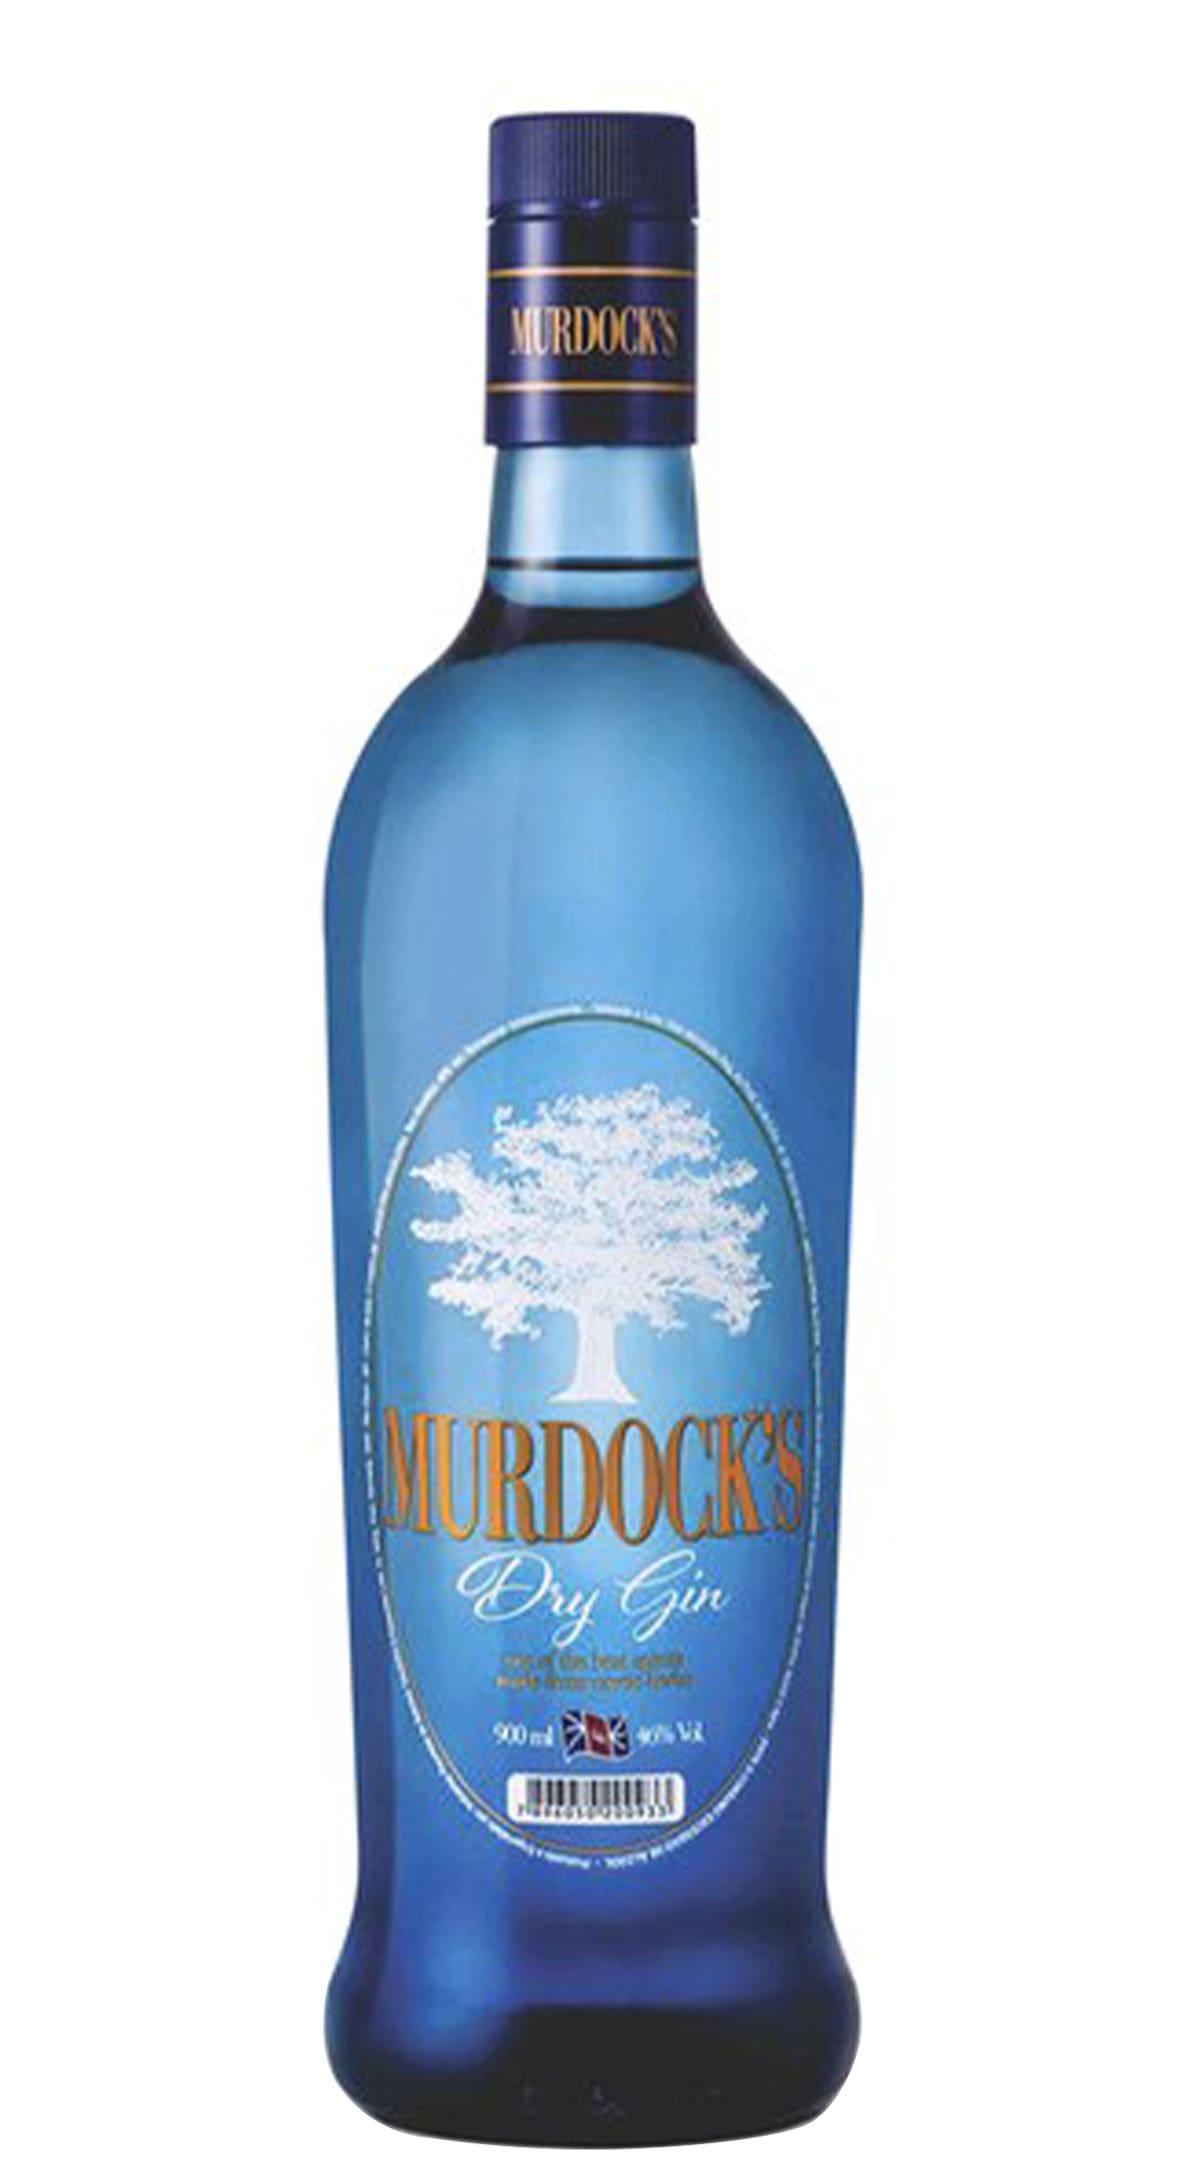 Gin Dry Murdock's 900ml - Imigrantes Bebidas